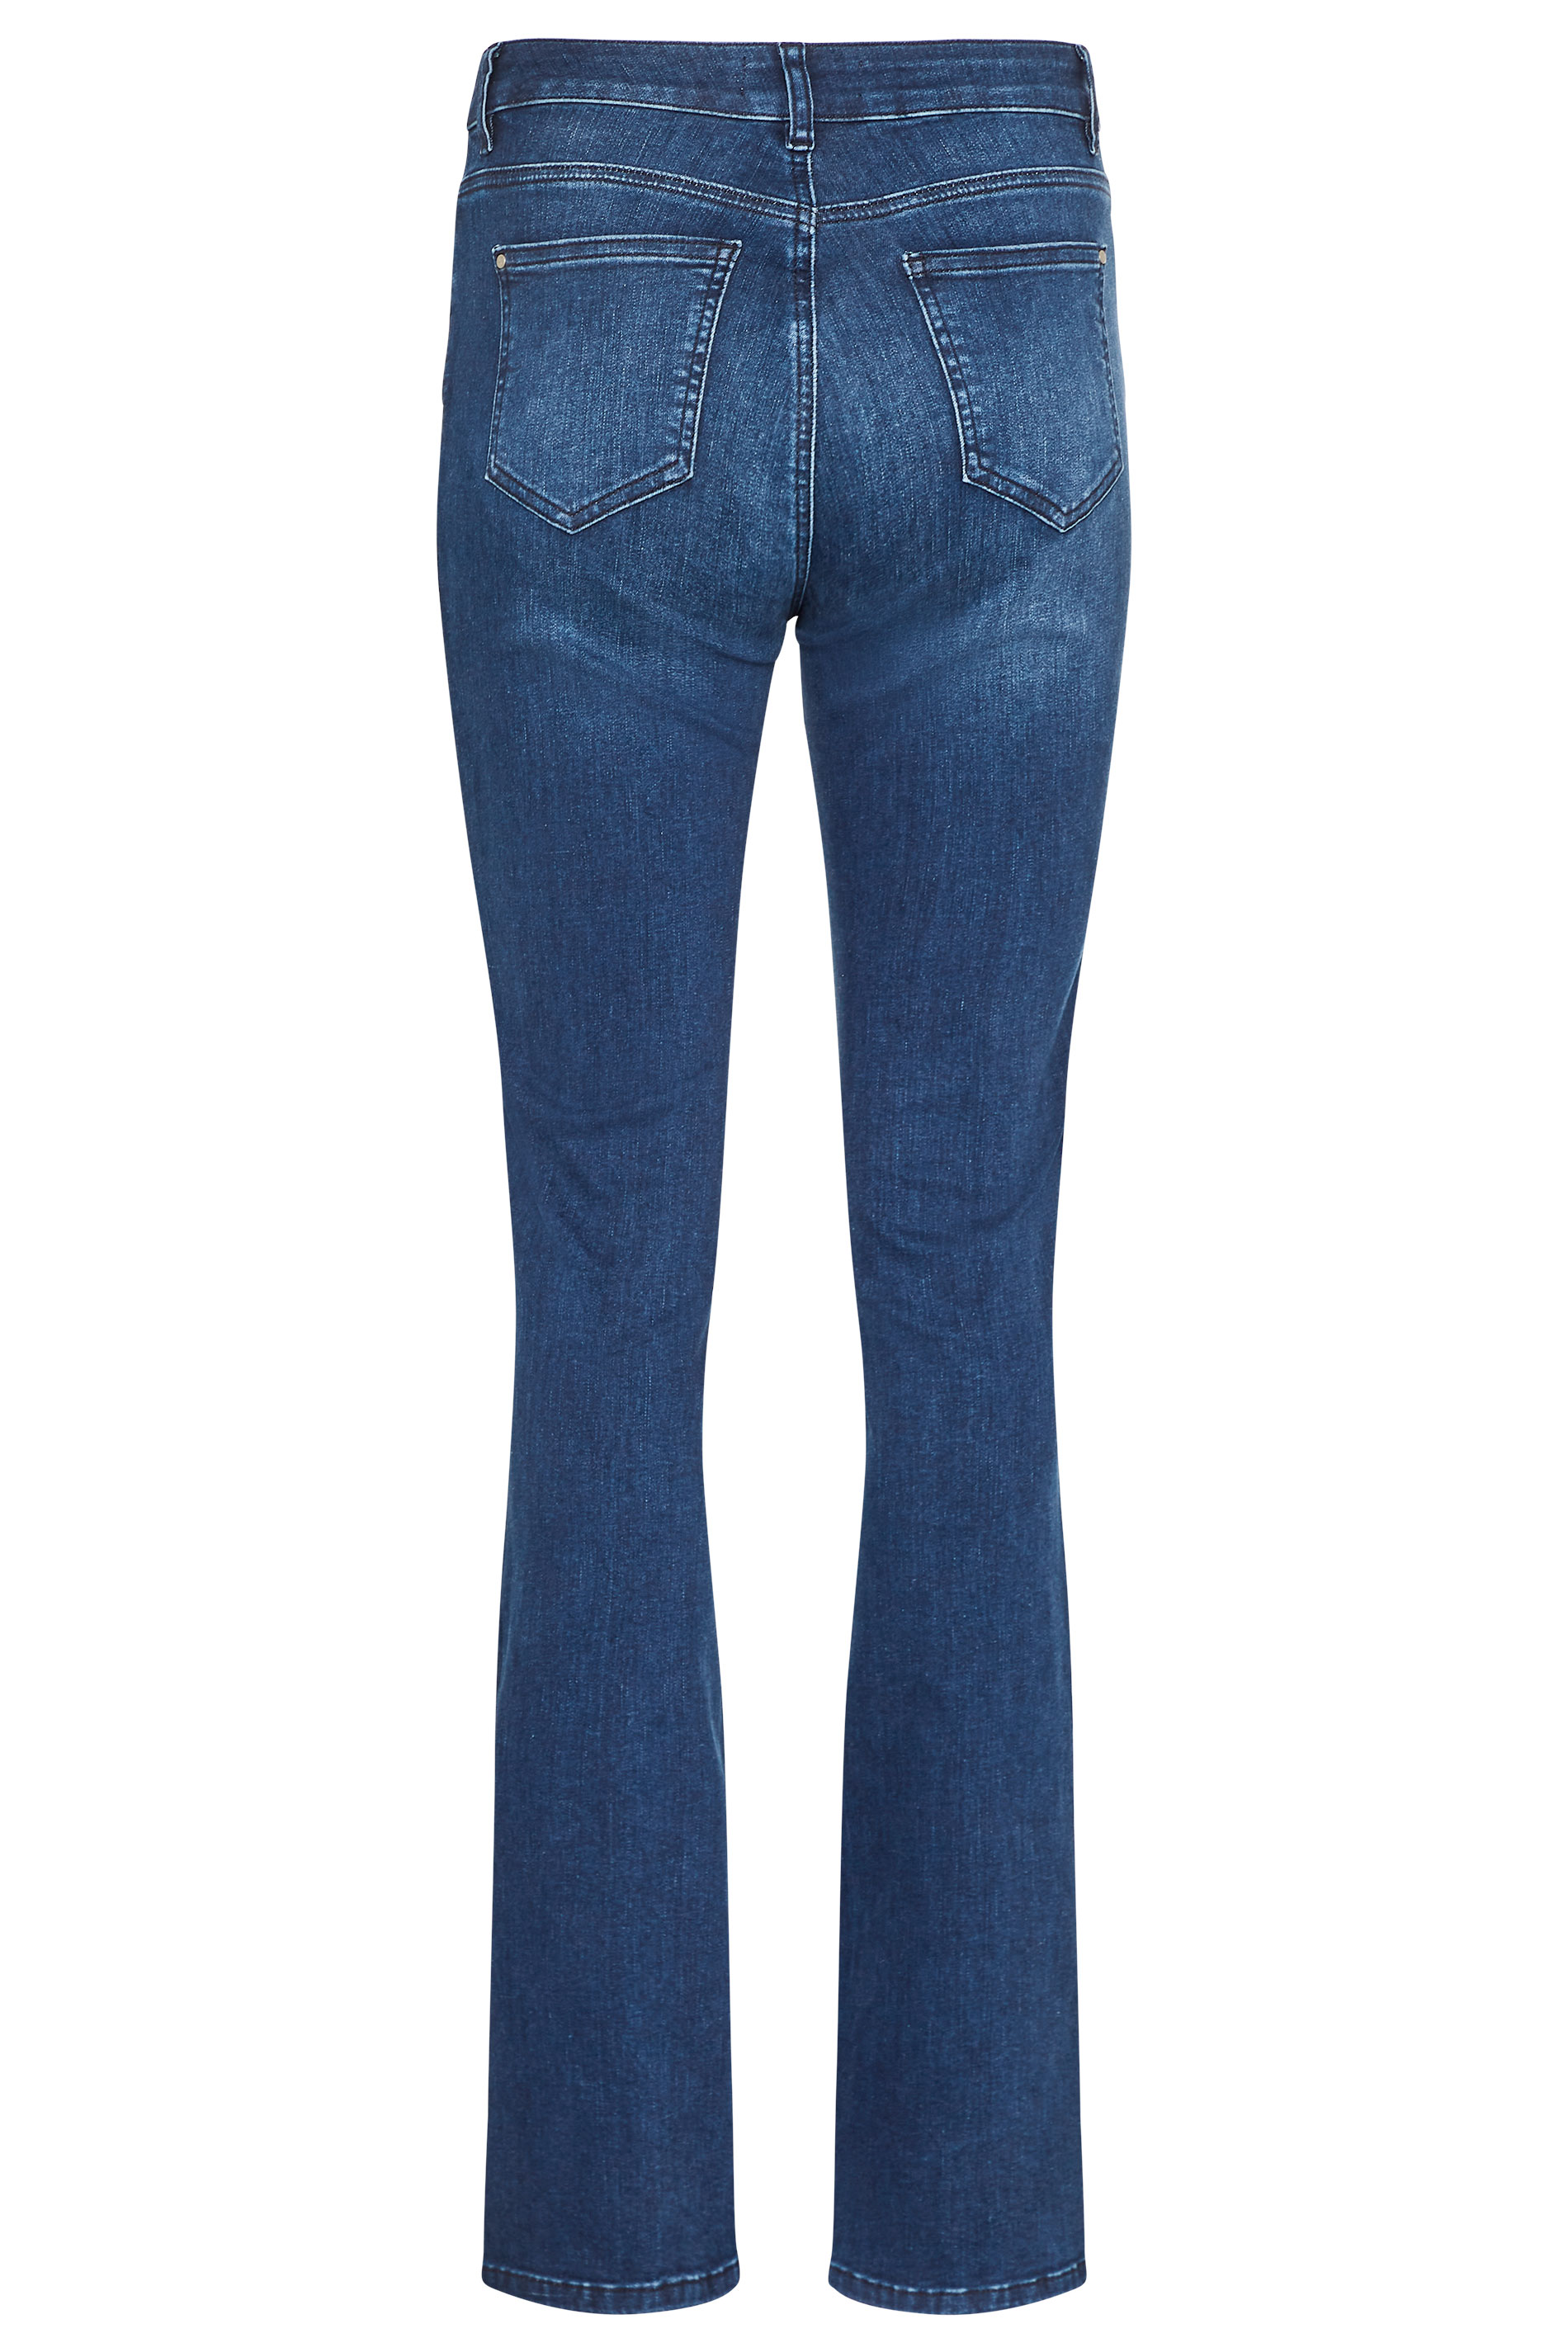 Indigo Blue Ultra Stretch Bootcut Jeans | Long Tall Sally